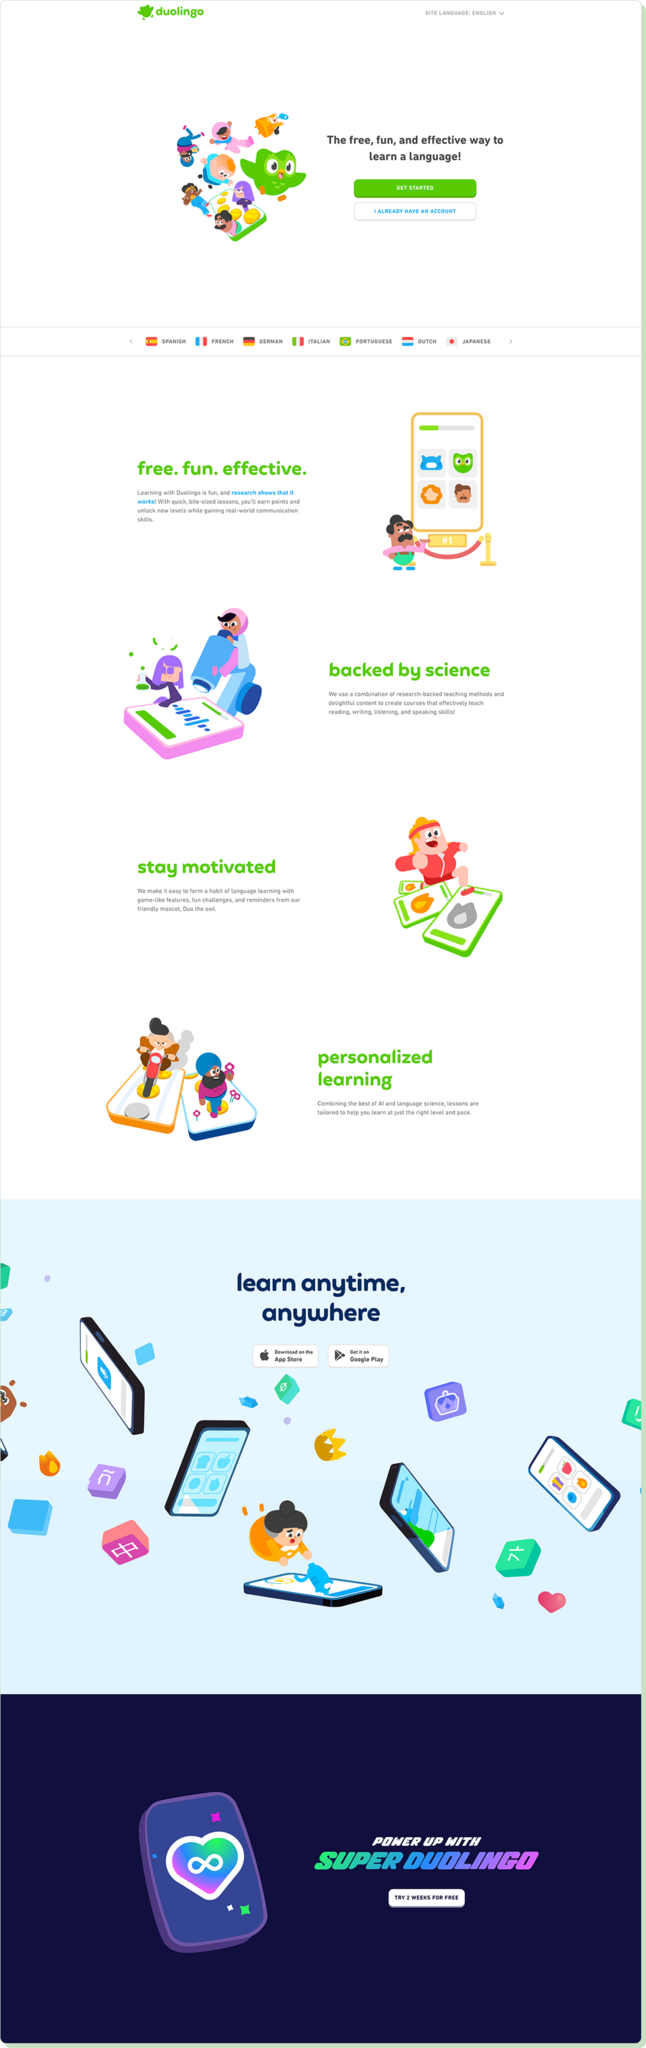 Duolingo product landing page